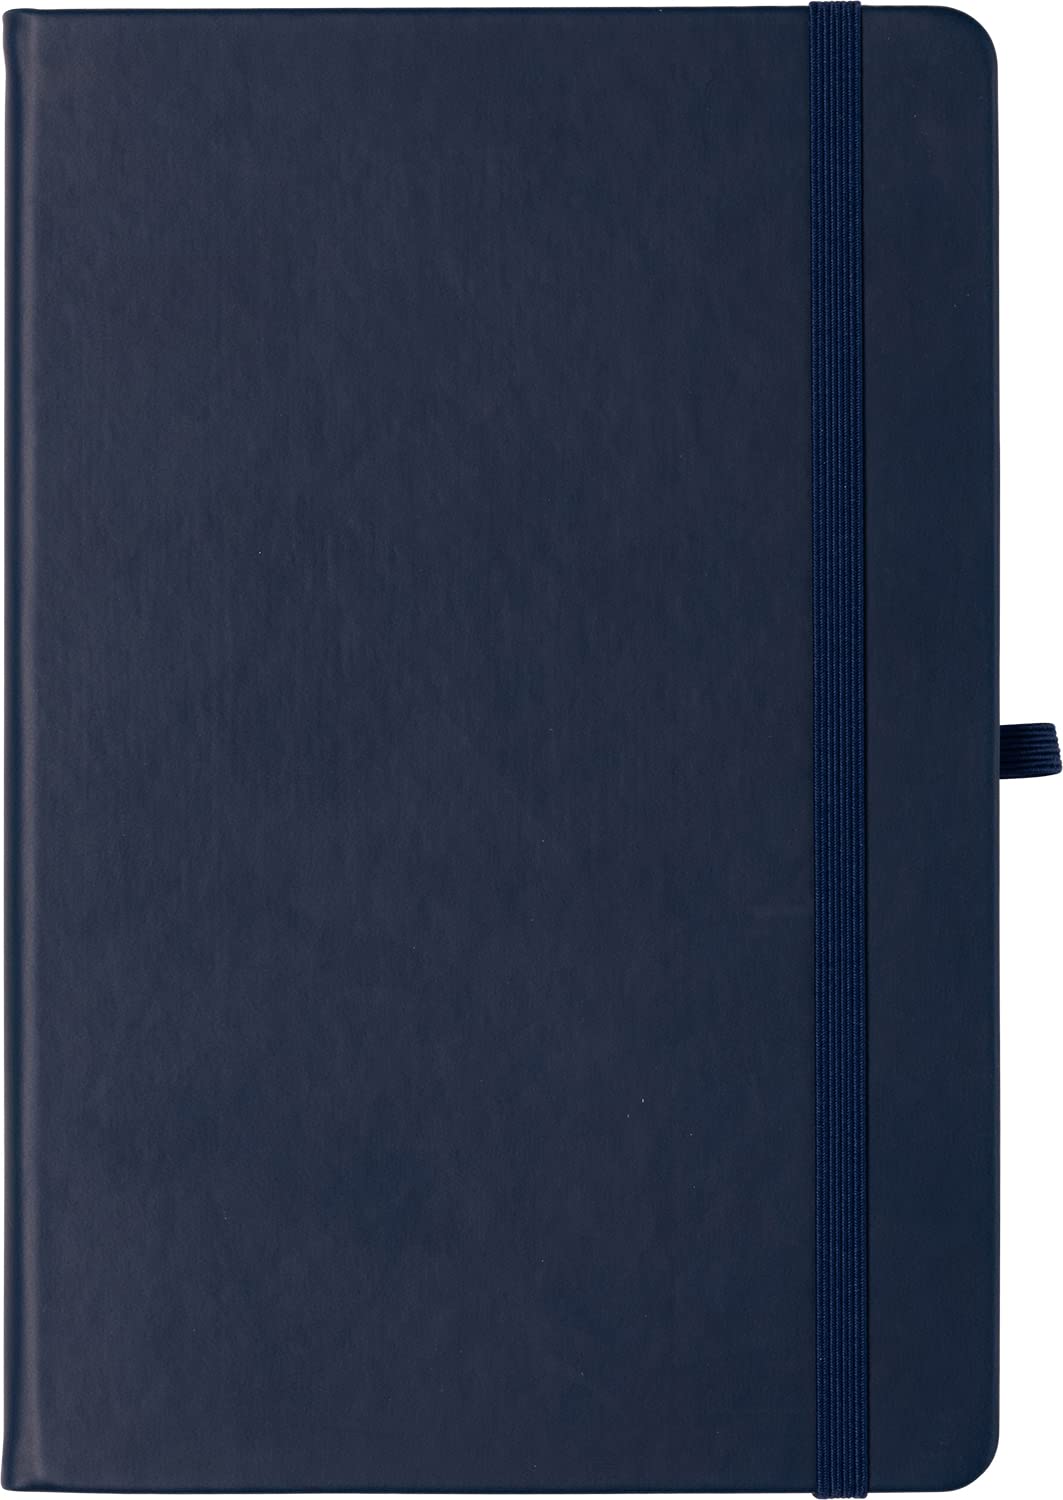 Eccolo Hardbound Writing Journal Navy Blue